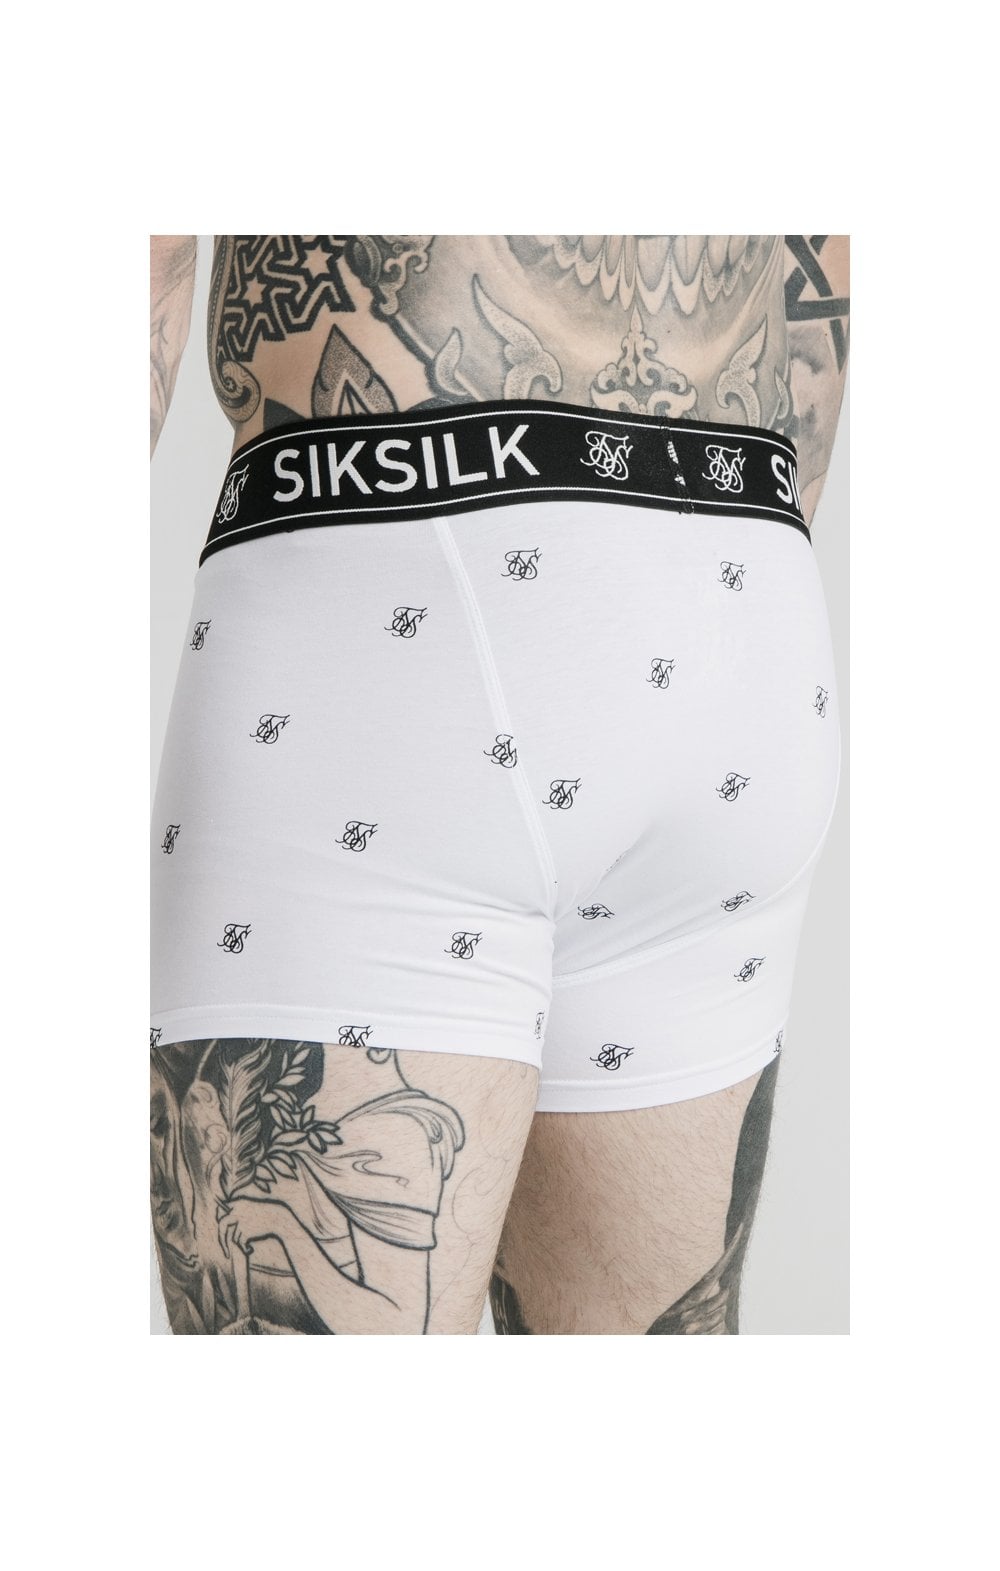 SikSilk Logo Taped Boxer Shorts (2 Pack) - White &amp; Black Pack of 2 Boxers - 1 White pair and 1 Black pair (6)